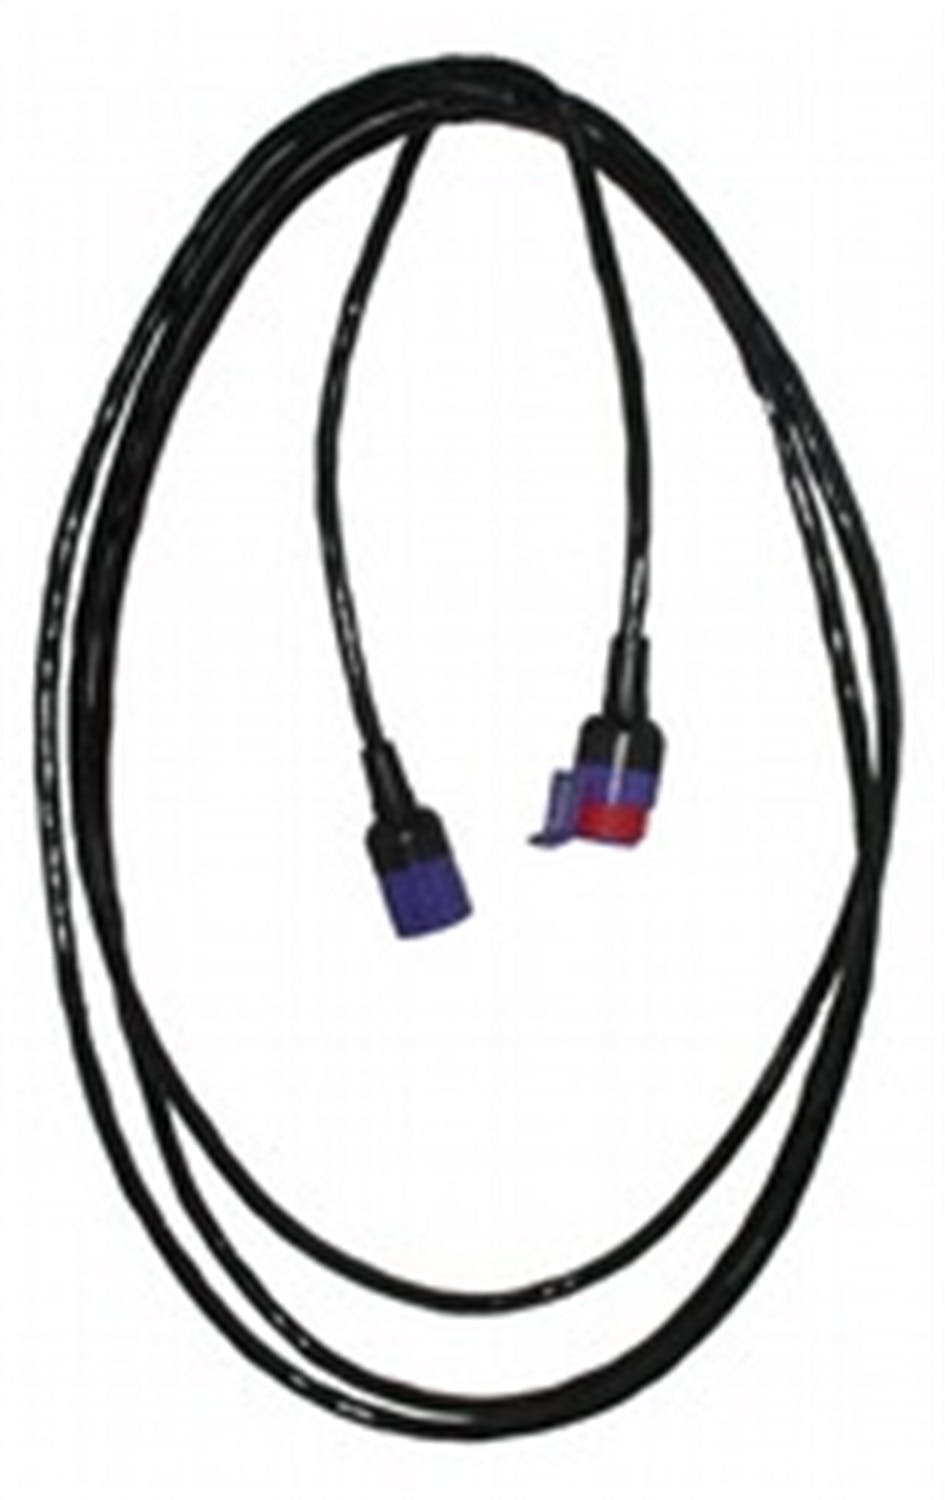 Racepak 280-CA-VM-048 V-Net Extension Cable